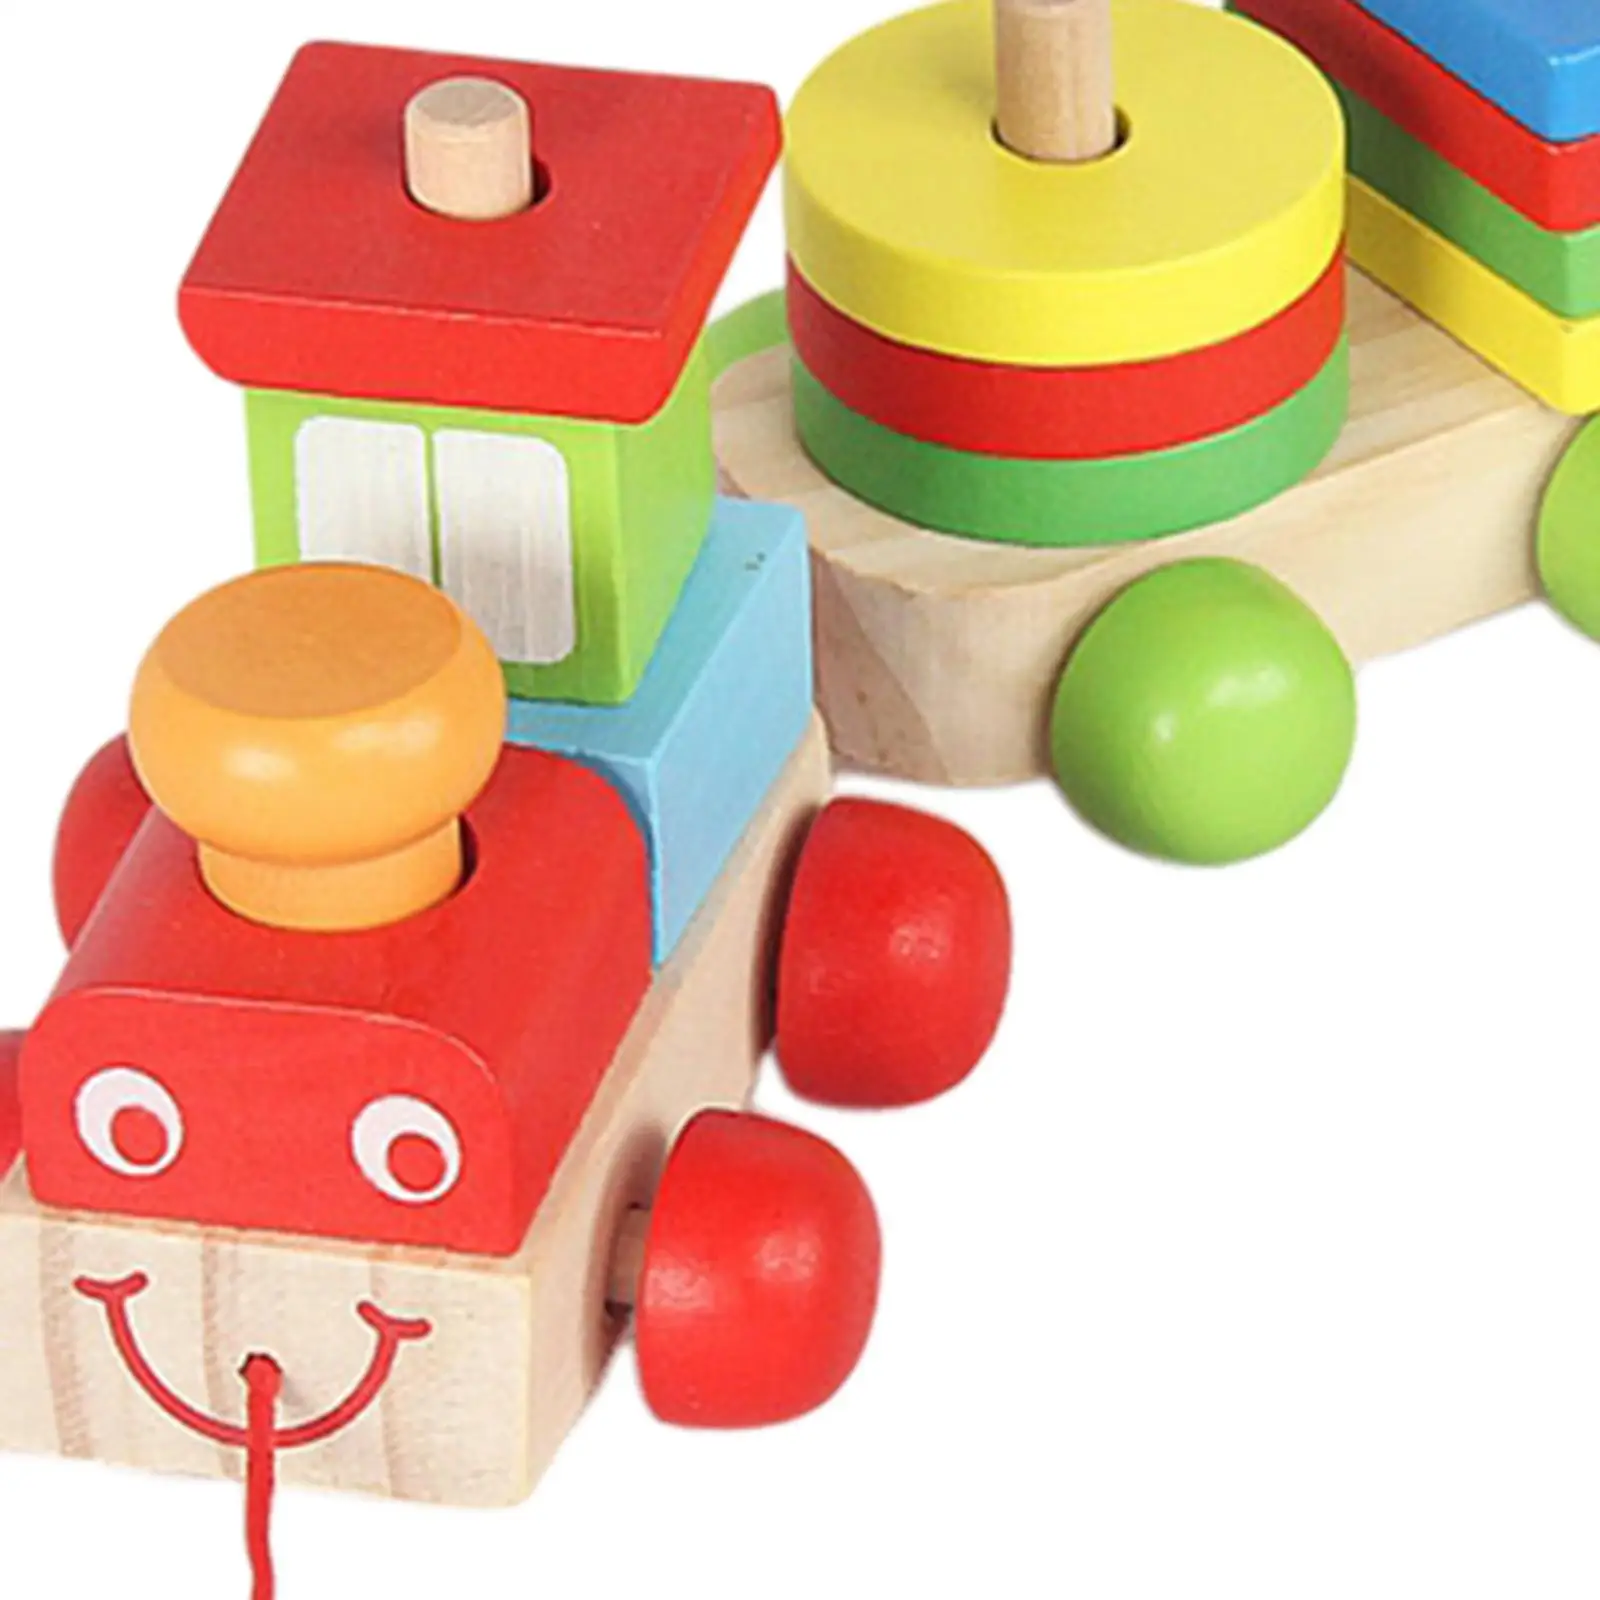 Wooden Montessori Toys Preschool Learning Toys Fine Motor Skills Matching Blocks for Boy Toddlers Kids Preschool Children Gift